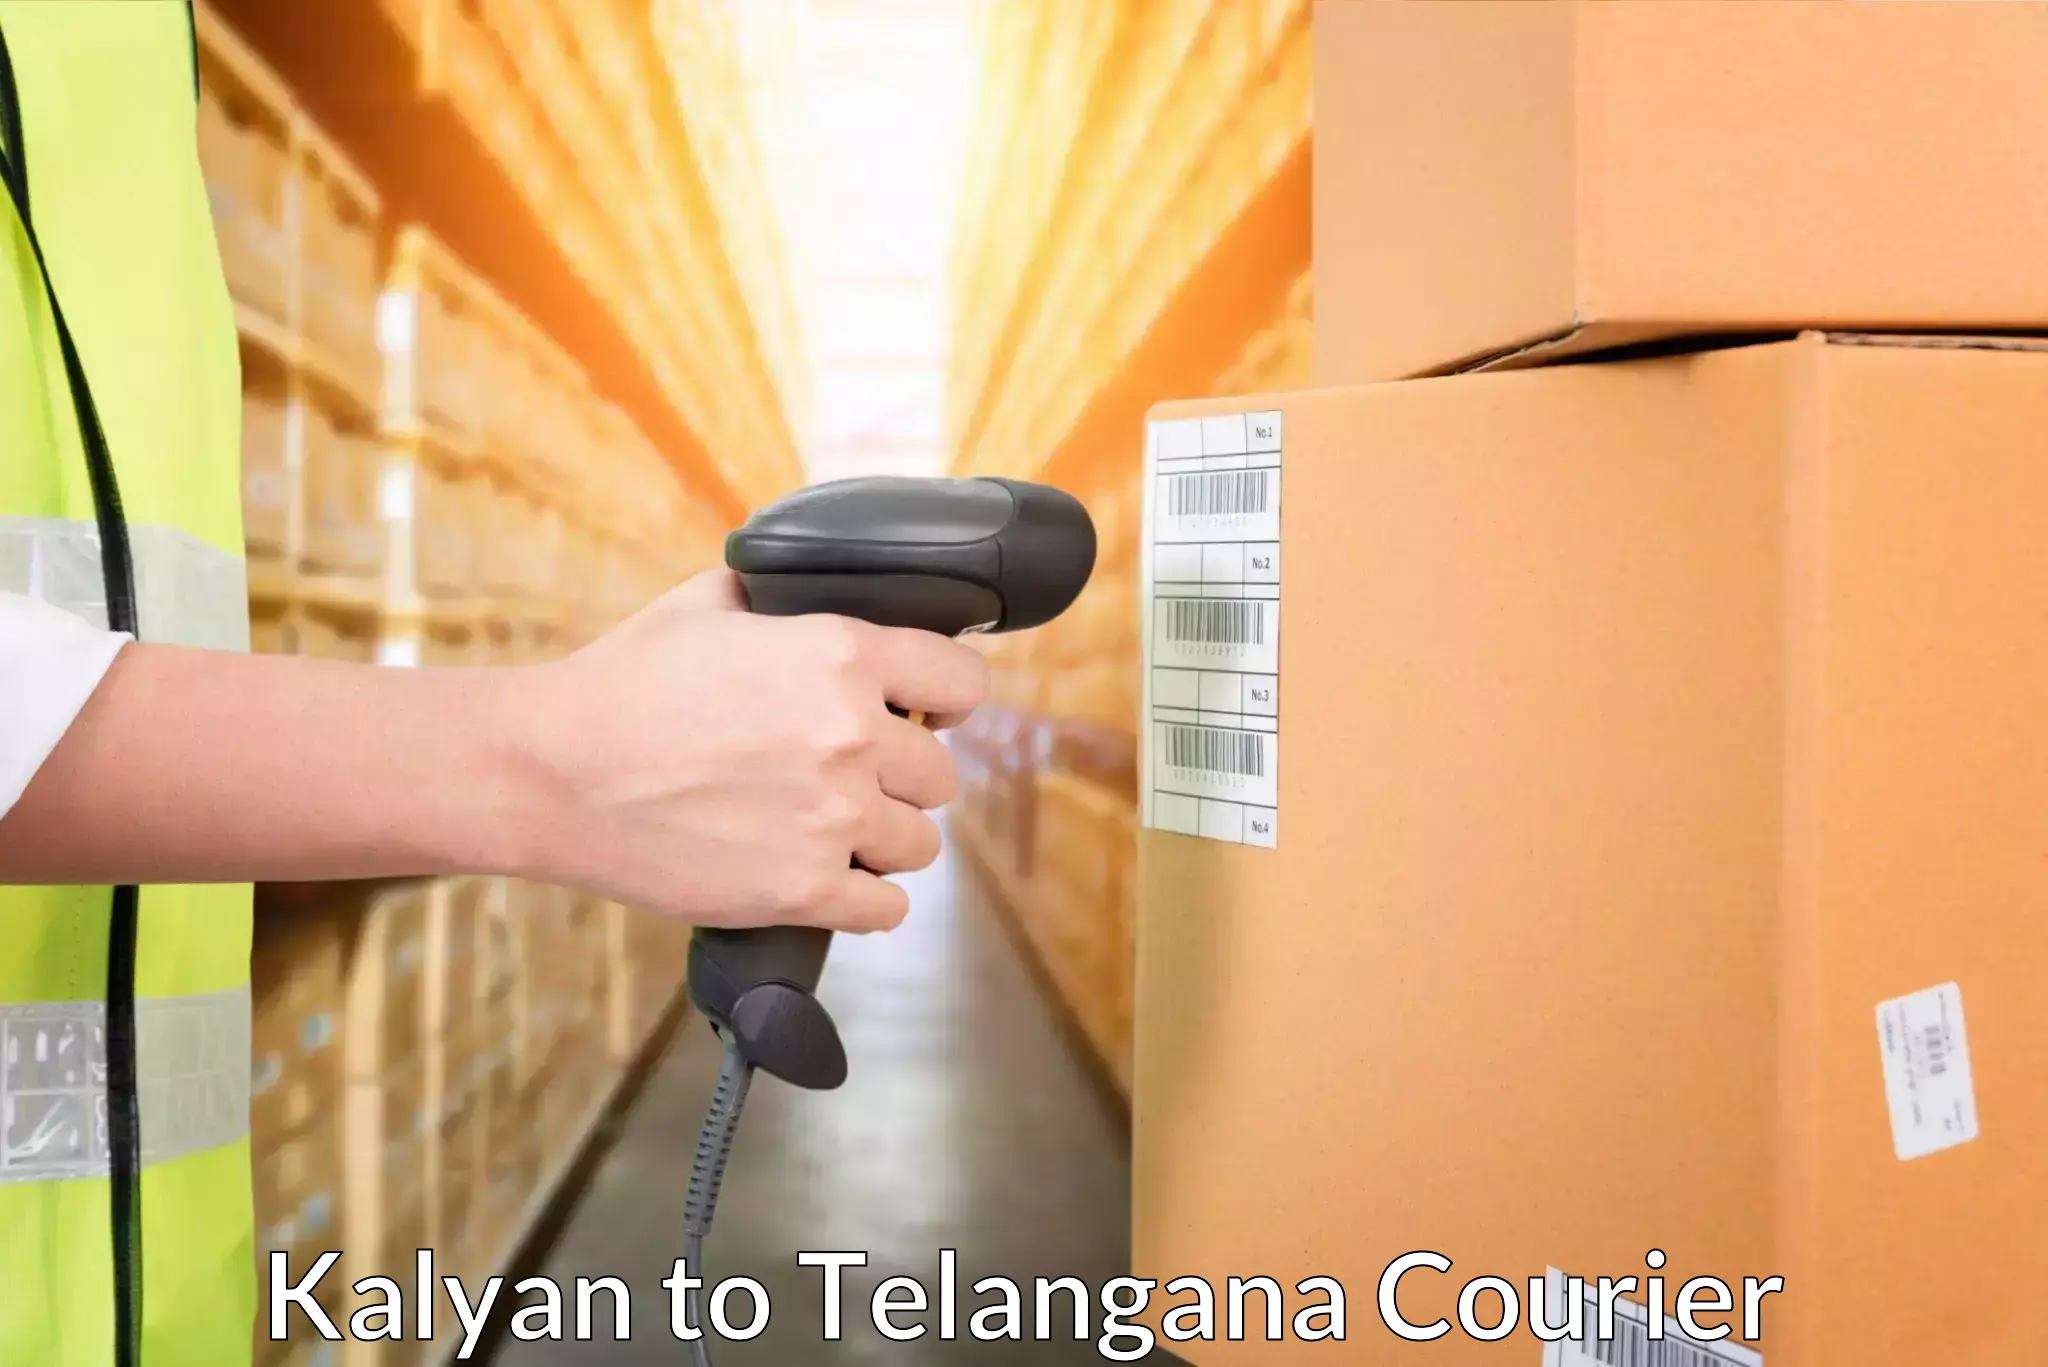 Flexible delivery schedules Kalyan to Dharmapuri Jagtial